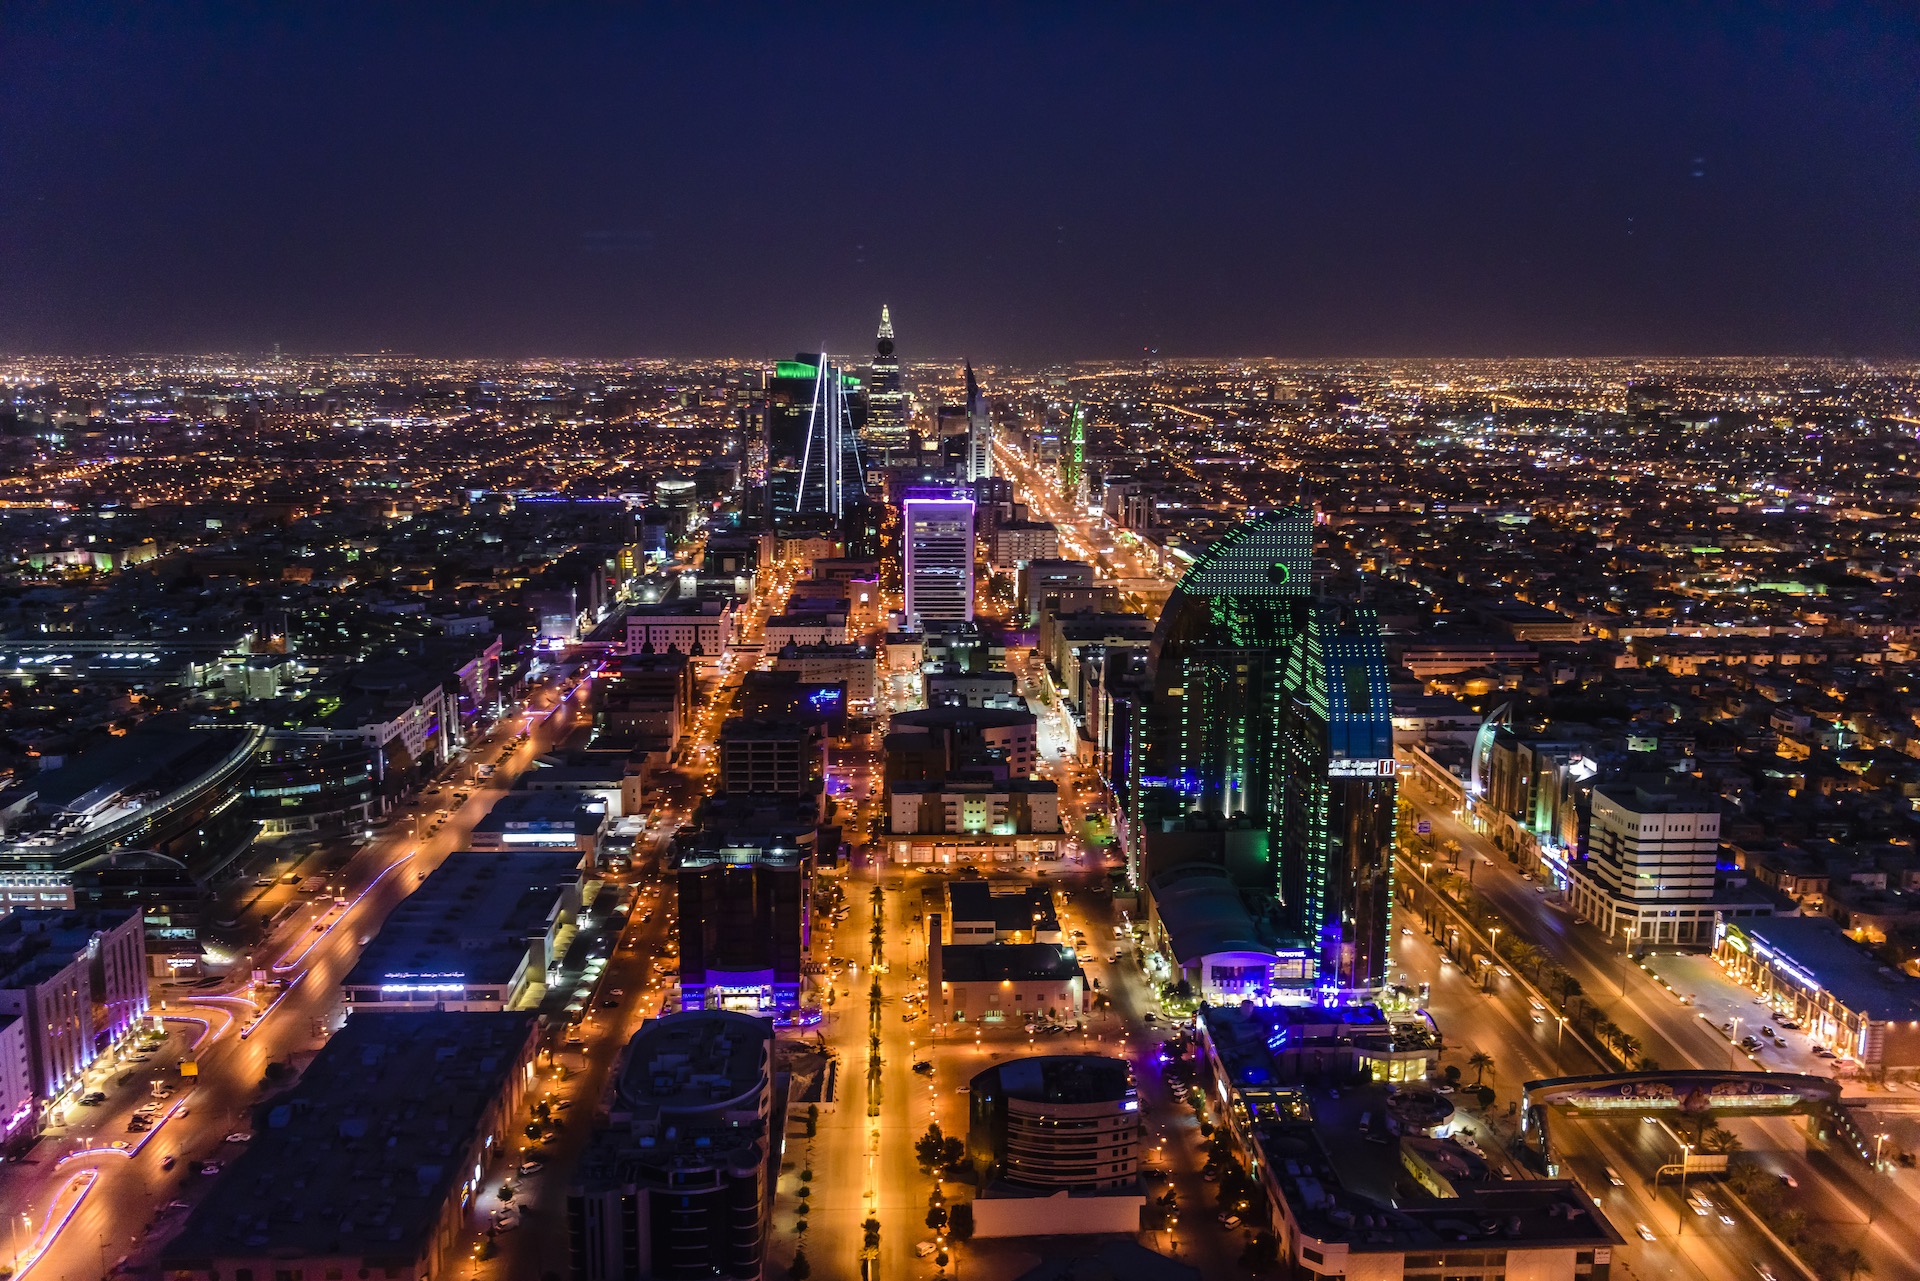 GDP in Saudi Arabia grew by 6.8 percent in Q4 2021: GASTAT